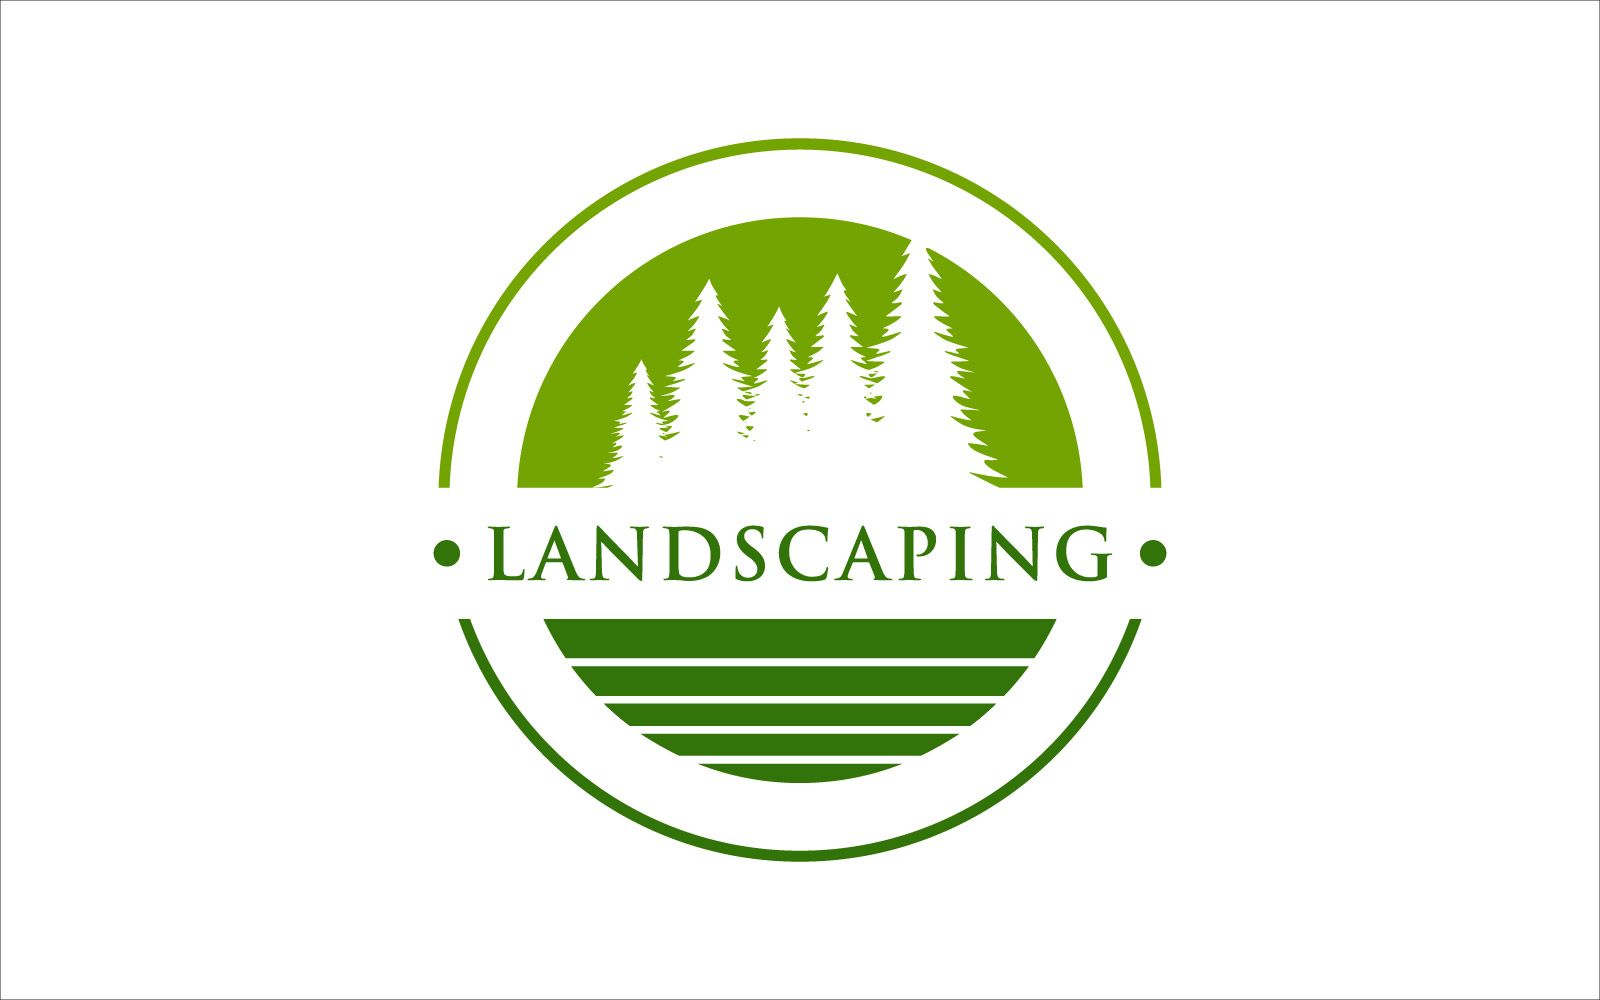 Green landscaping vector logo template